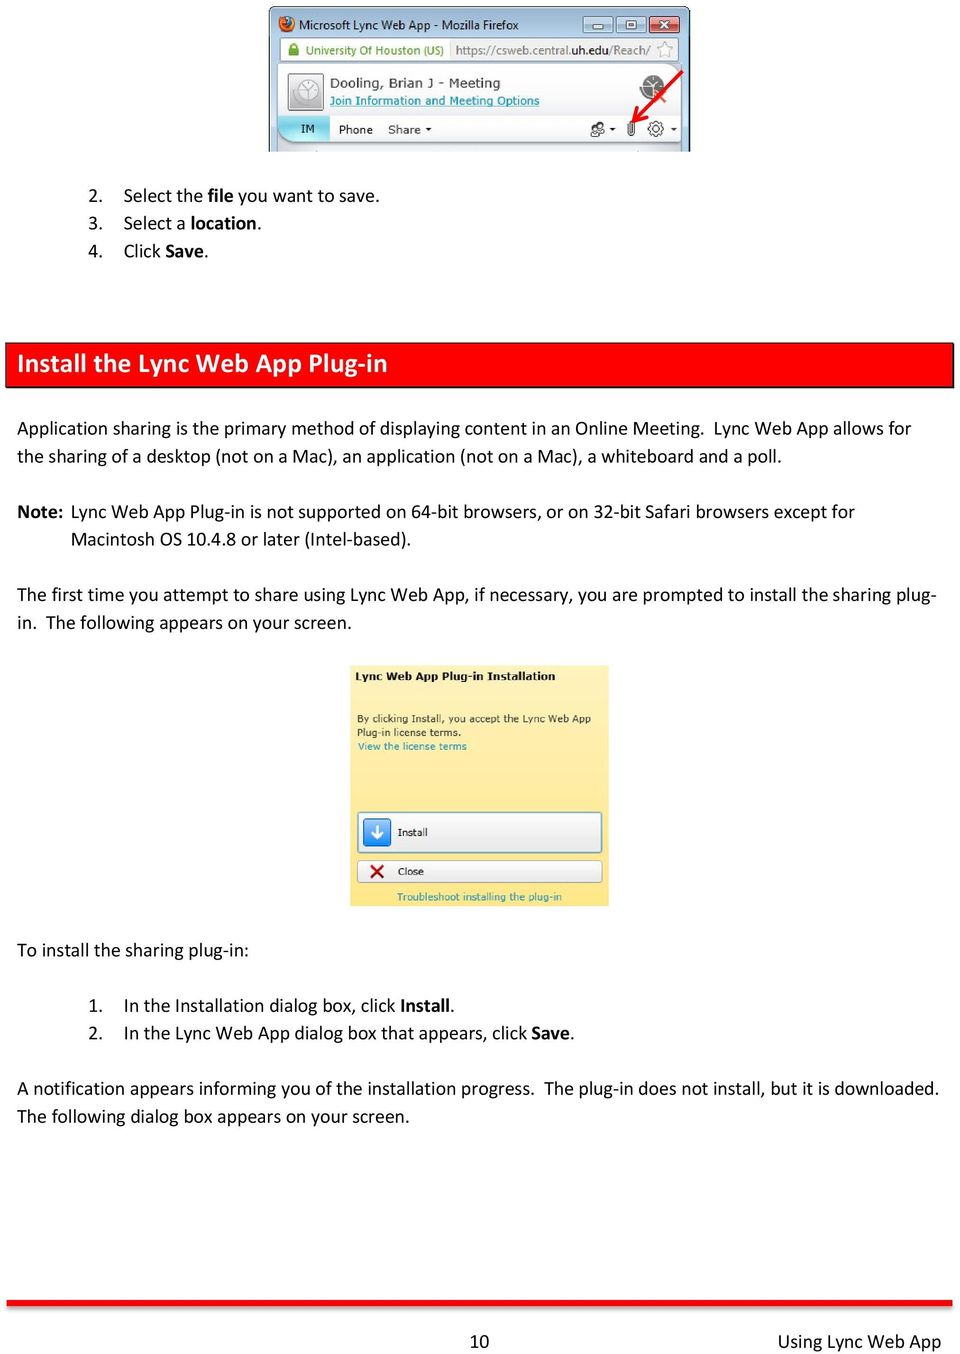 Microsoft lync web app plugin (64-bit)